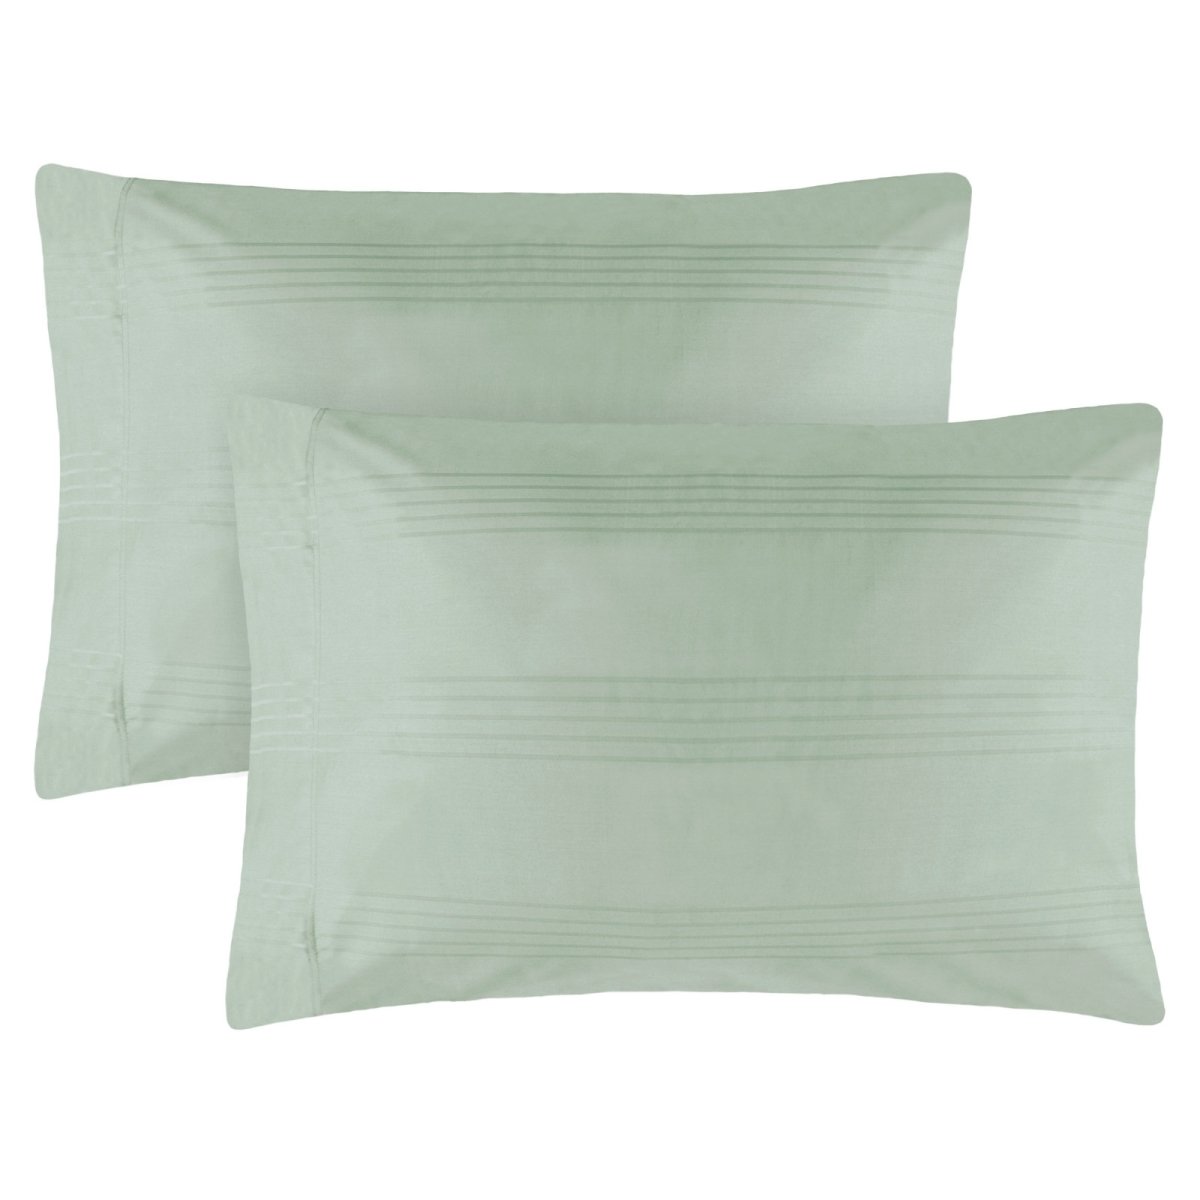 Yms008238 Premium 420 Thread Count 100 Percent Cotton Pillowcase Set, Aqua - Standard - 2 Piece